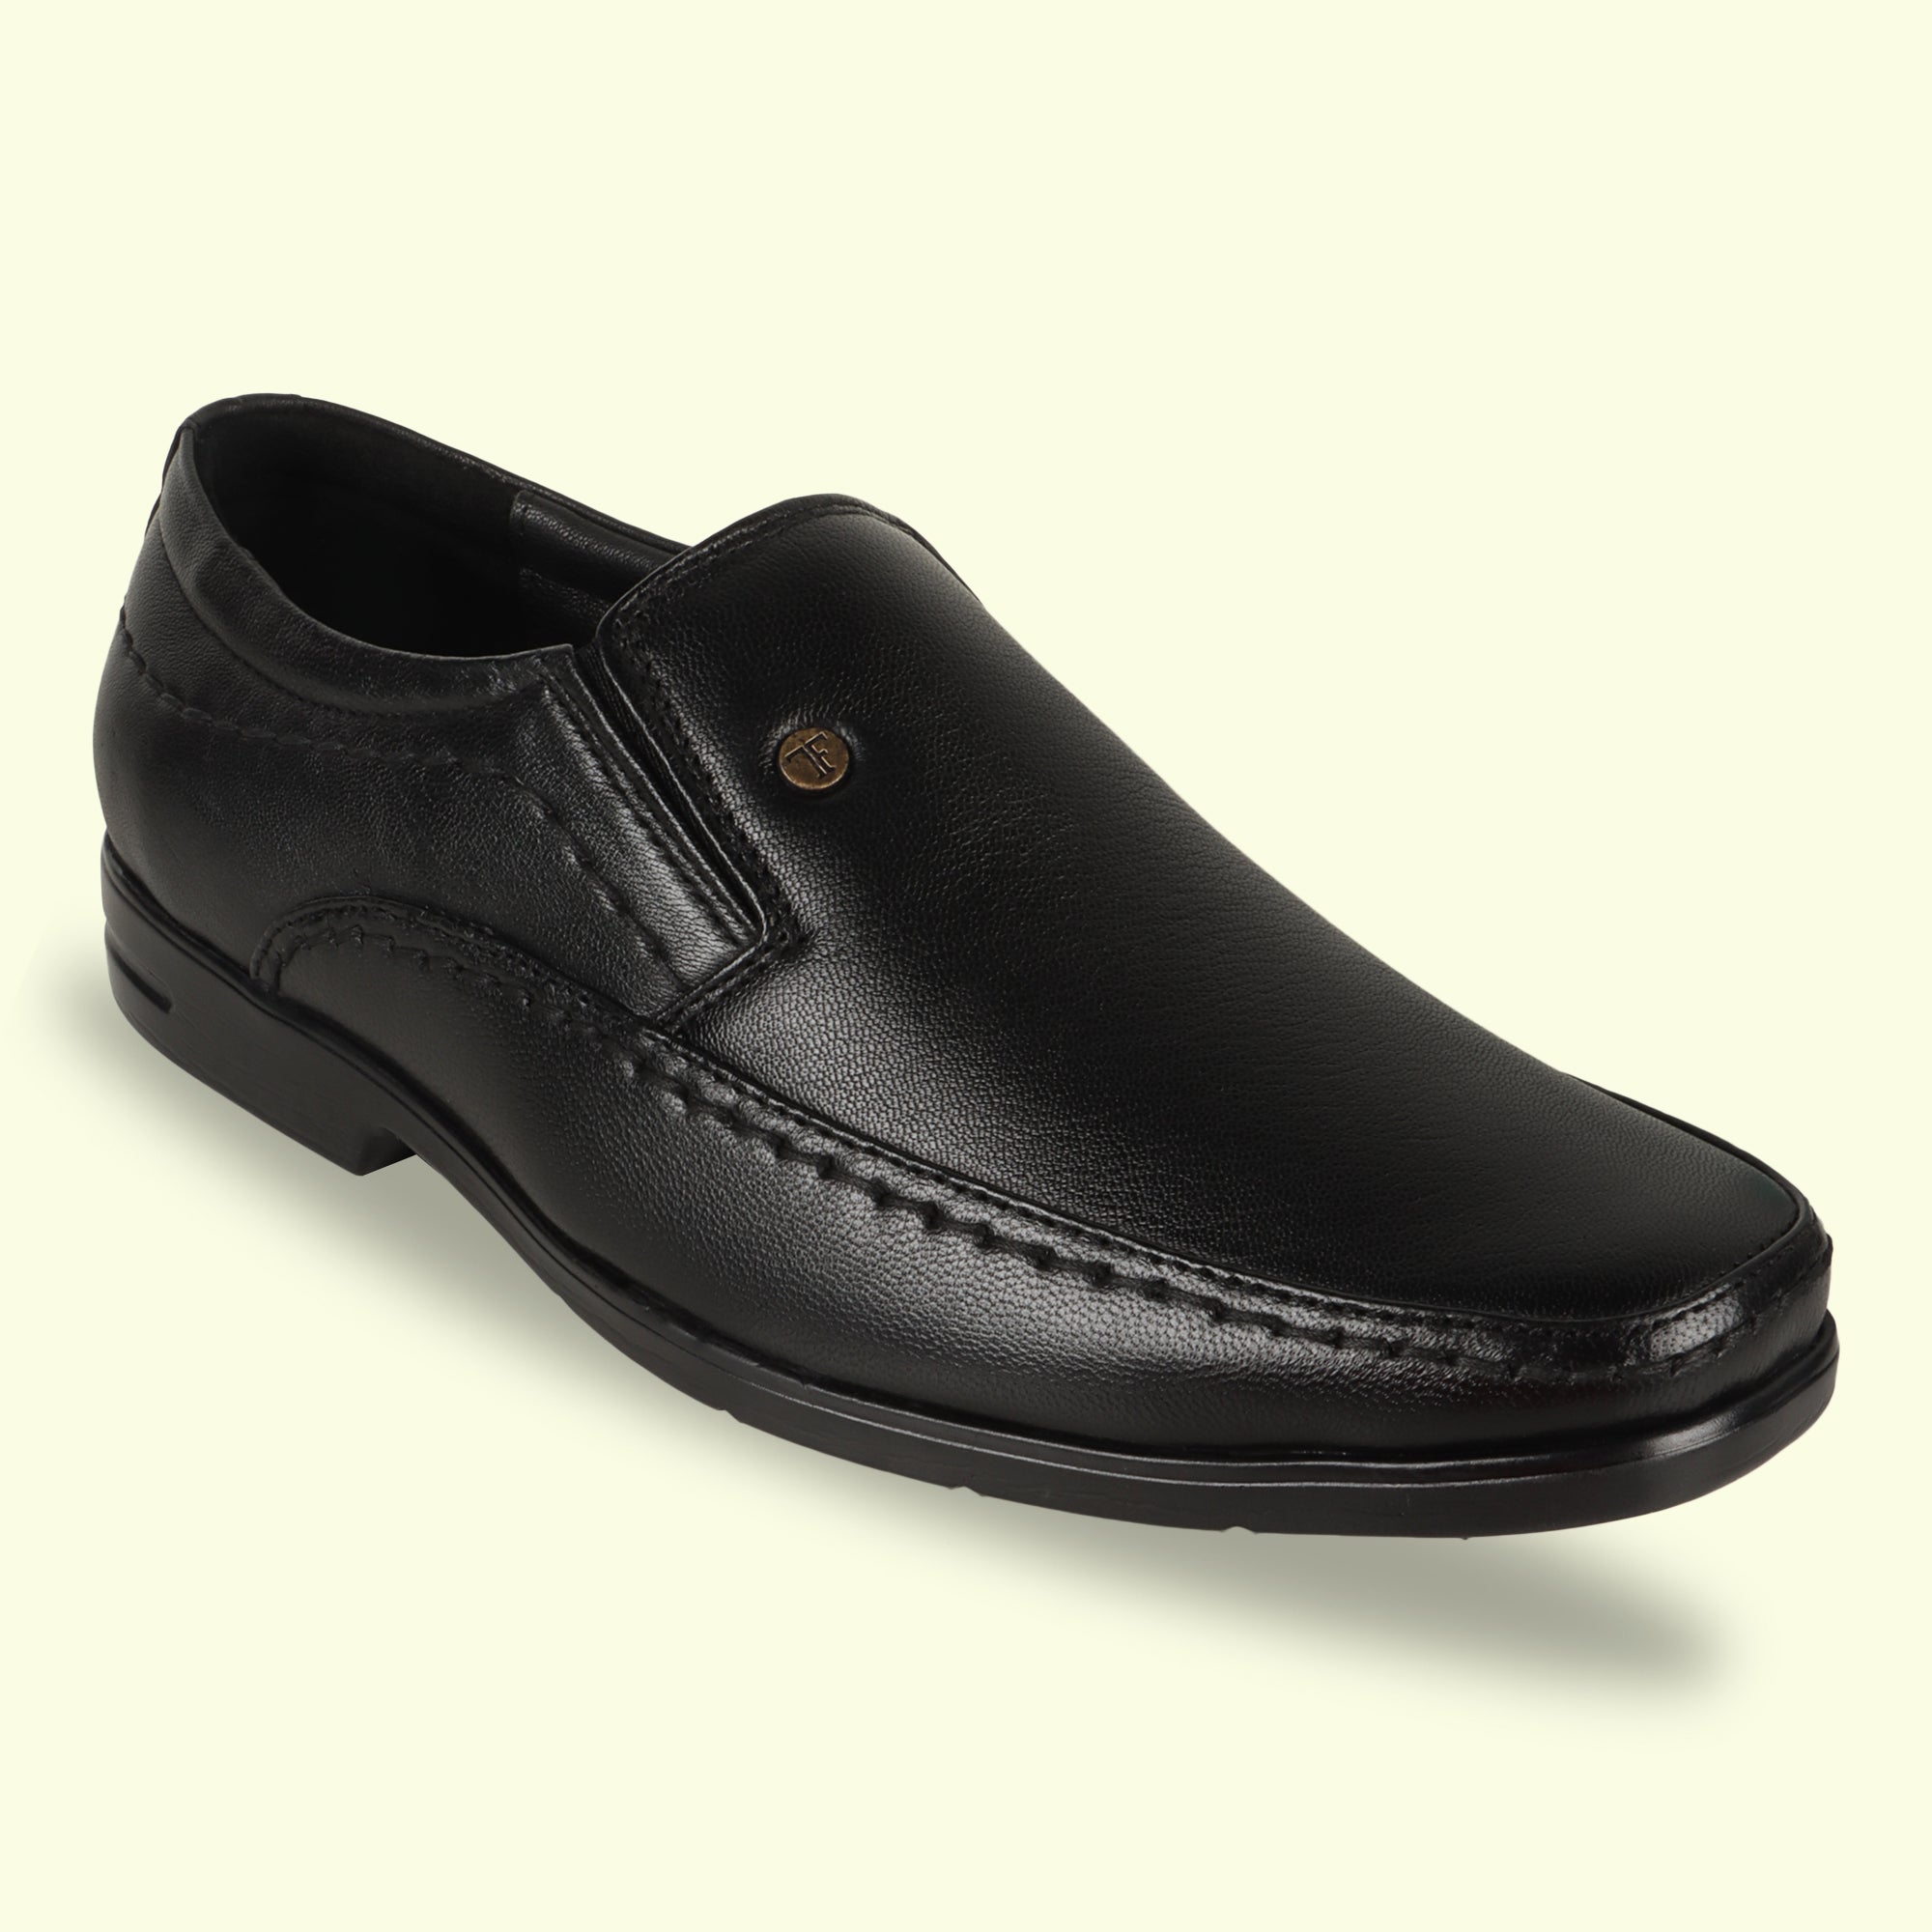 TRUDGE Black shoe For Men - 5038